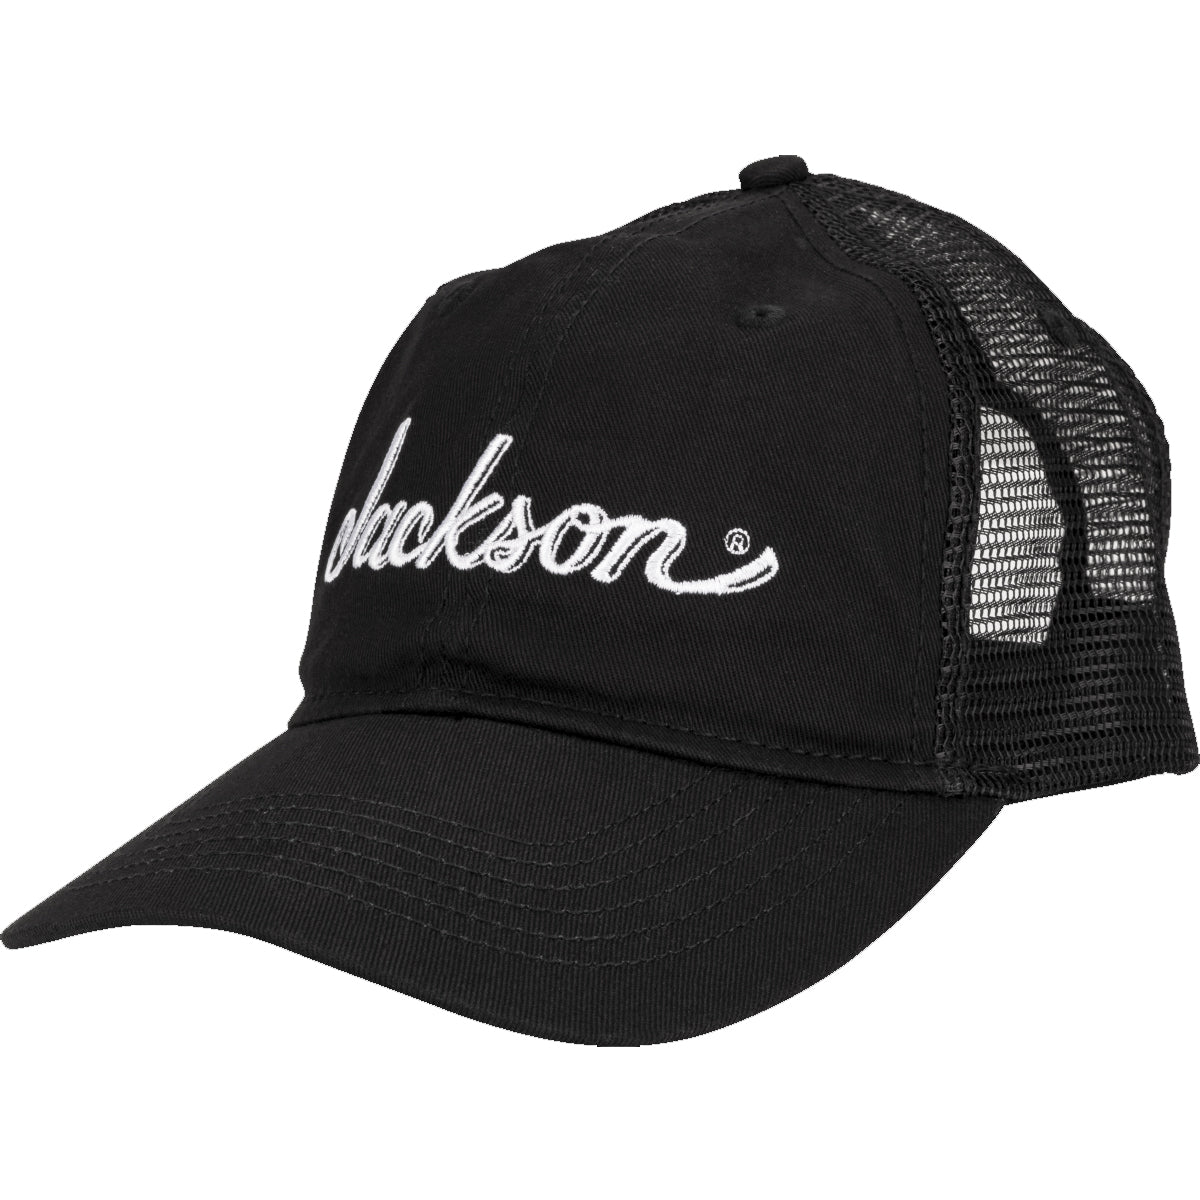 Jackson Trucker Hat Black - 2998785000